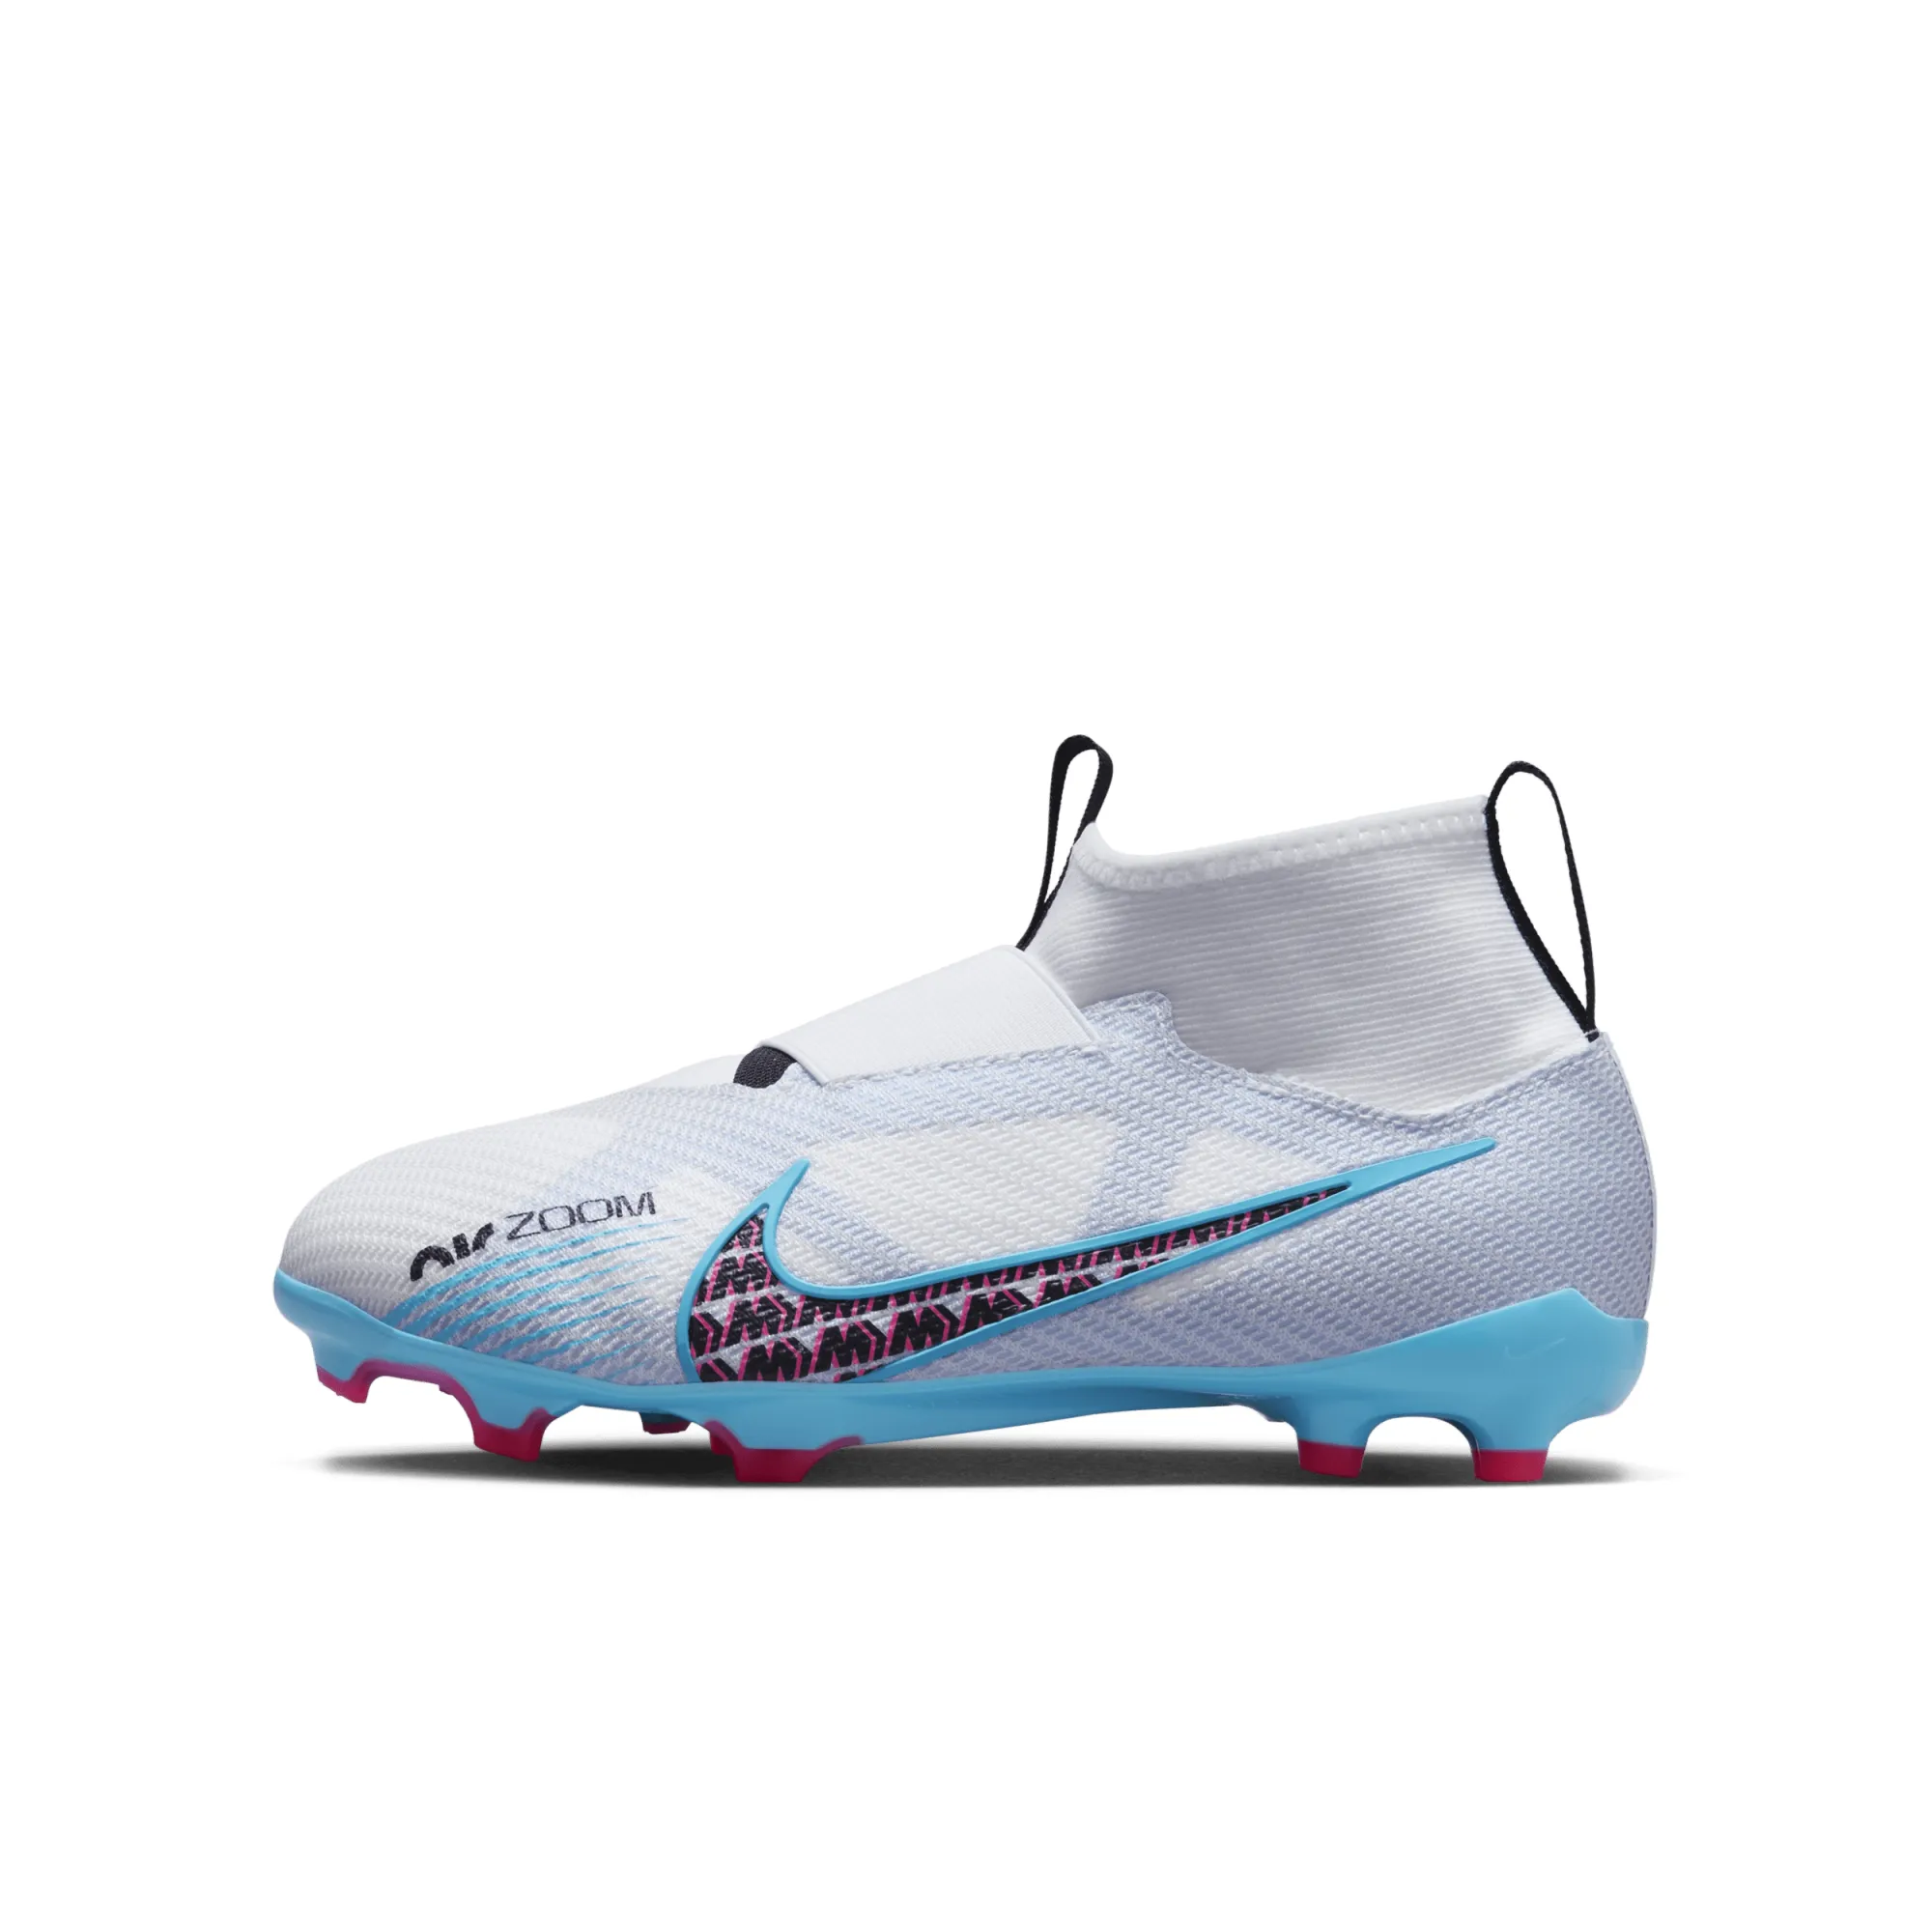 Nike CR7 Soccer Shoes for sale | eBay